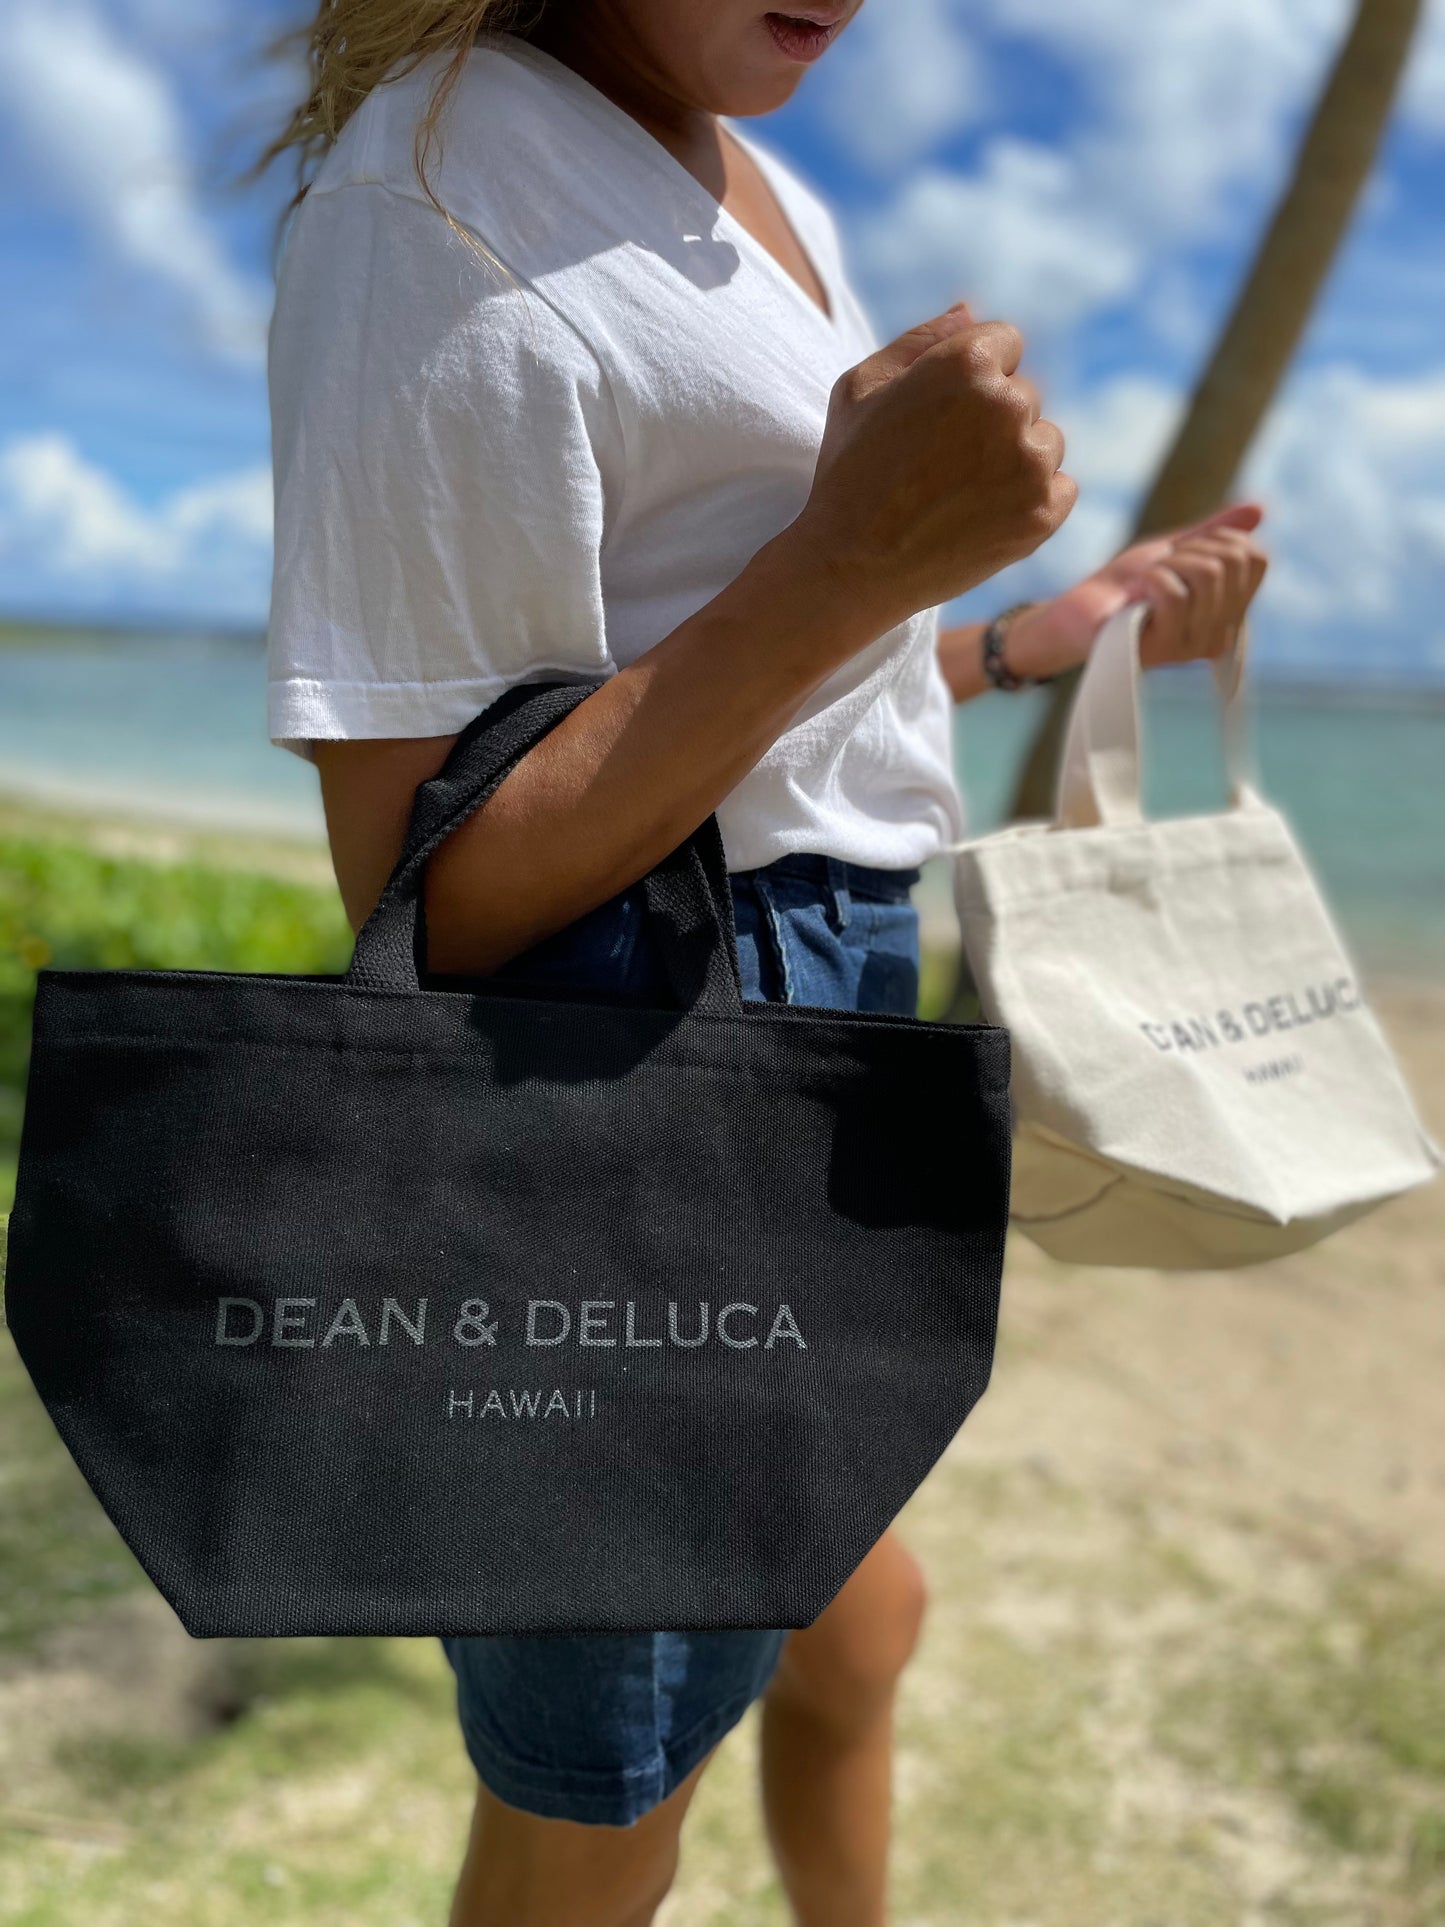 DEAN&DELUCA ハワイ限定デザイントートバッグ